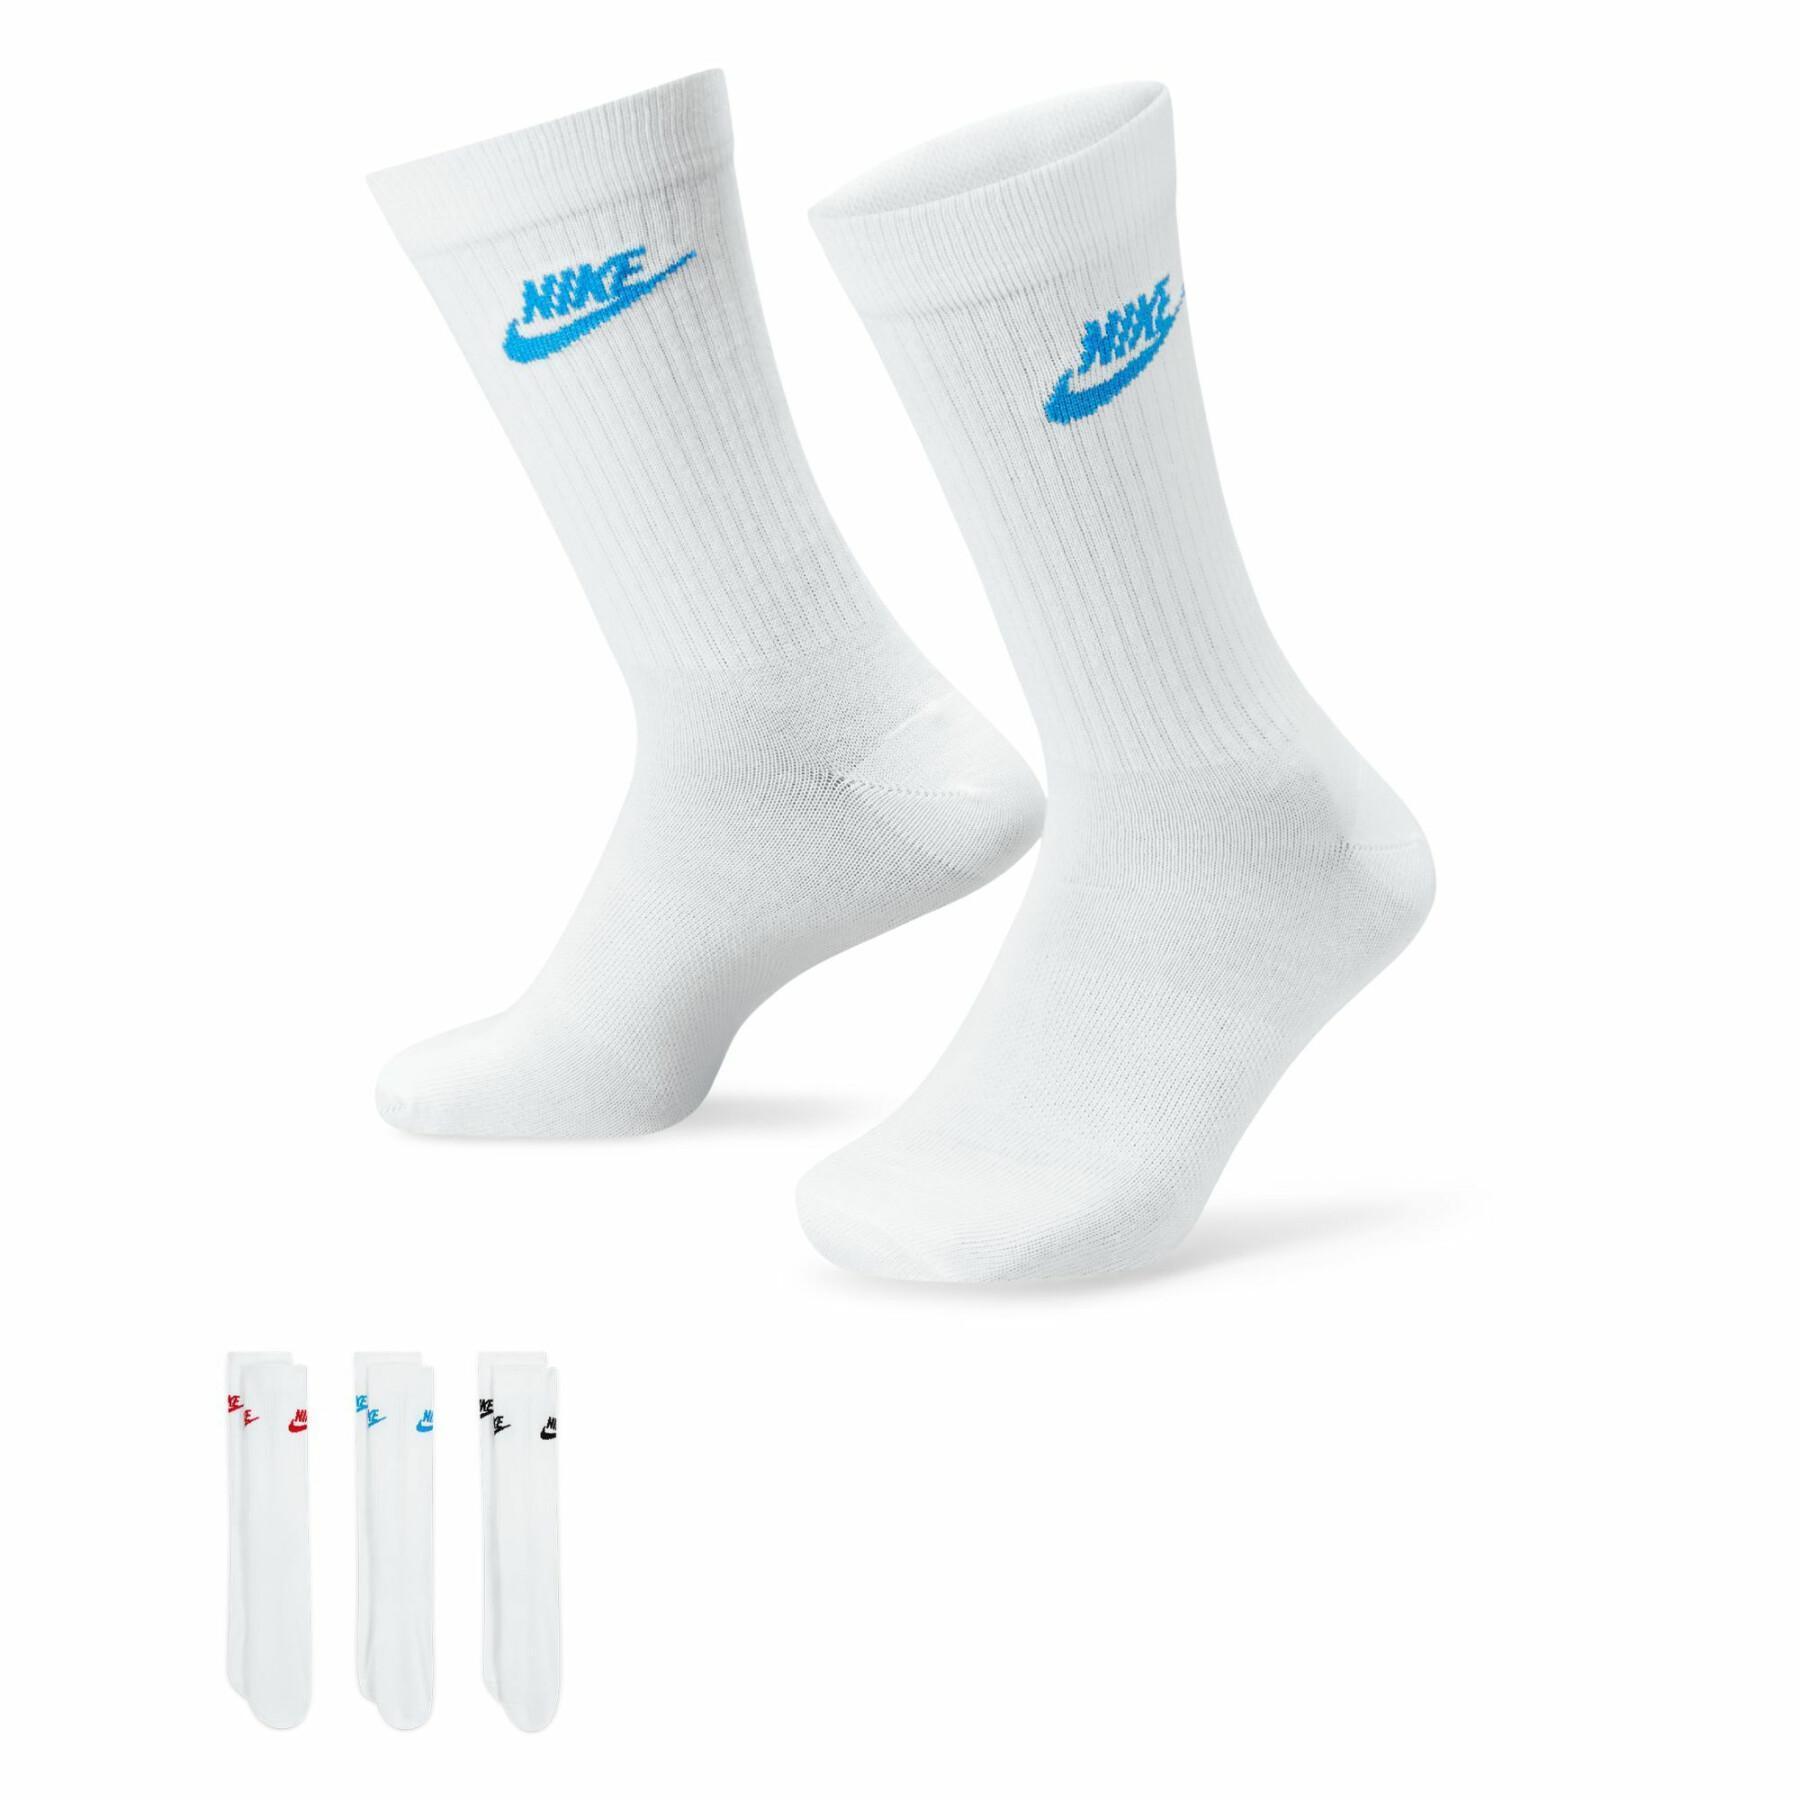 Mindarie-wa wear - Socks Nike nsw everyday essential - nike dunk ...